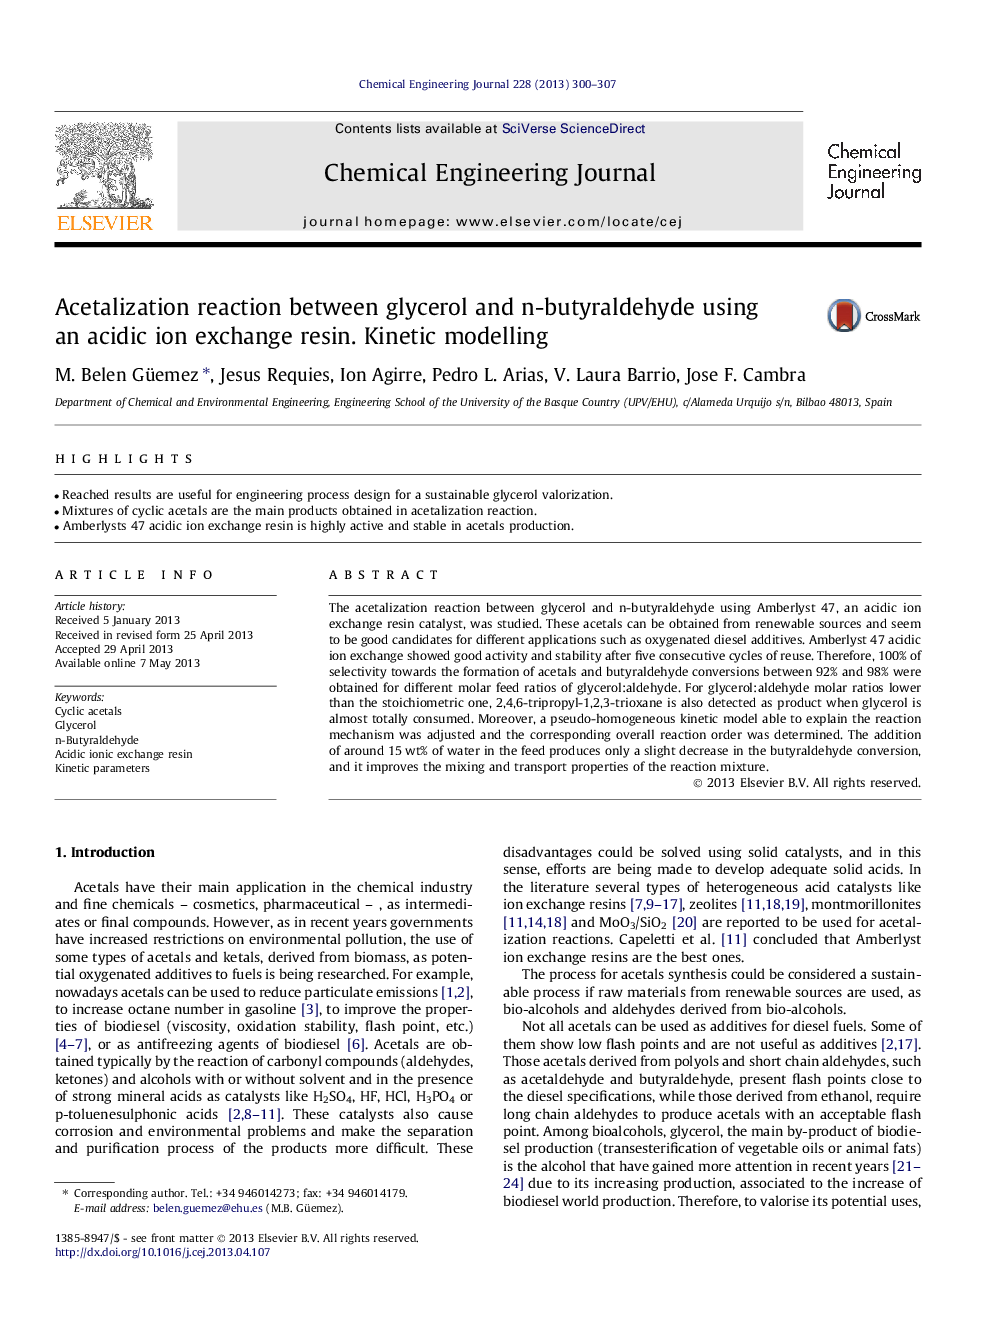 Acetalization reaction between glycerol and n-butyraldehyde using an acidic ion exchange resin. Kinetic modelling